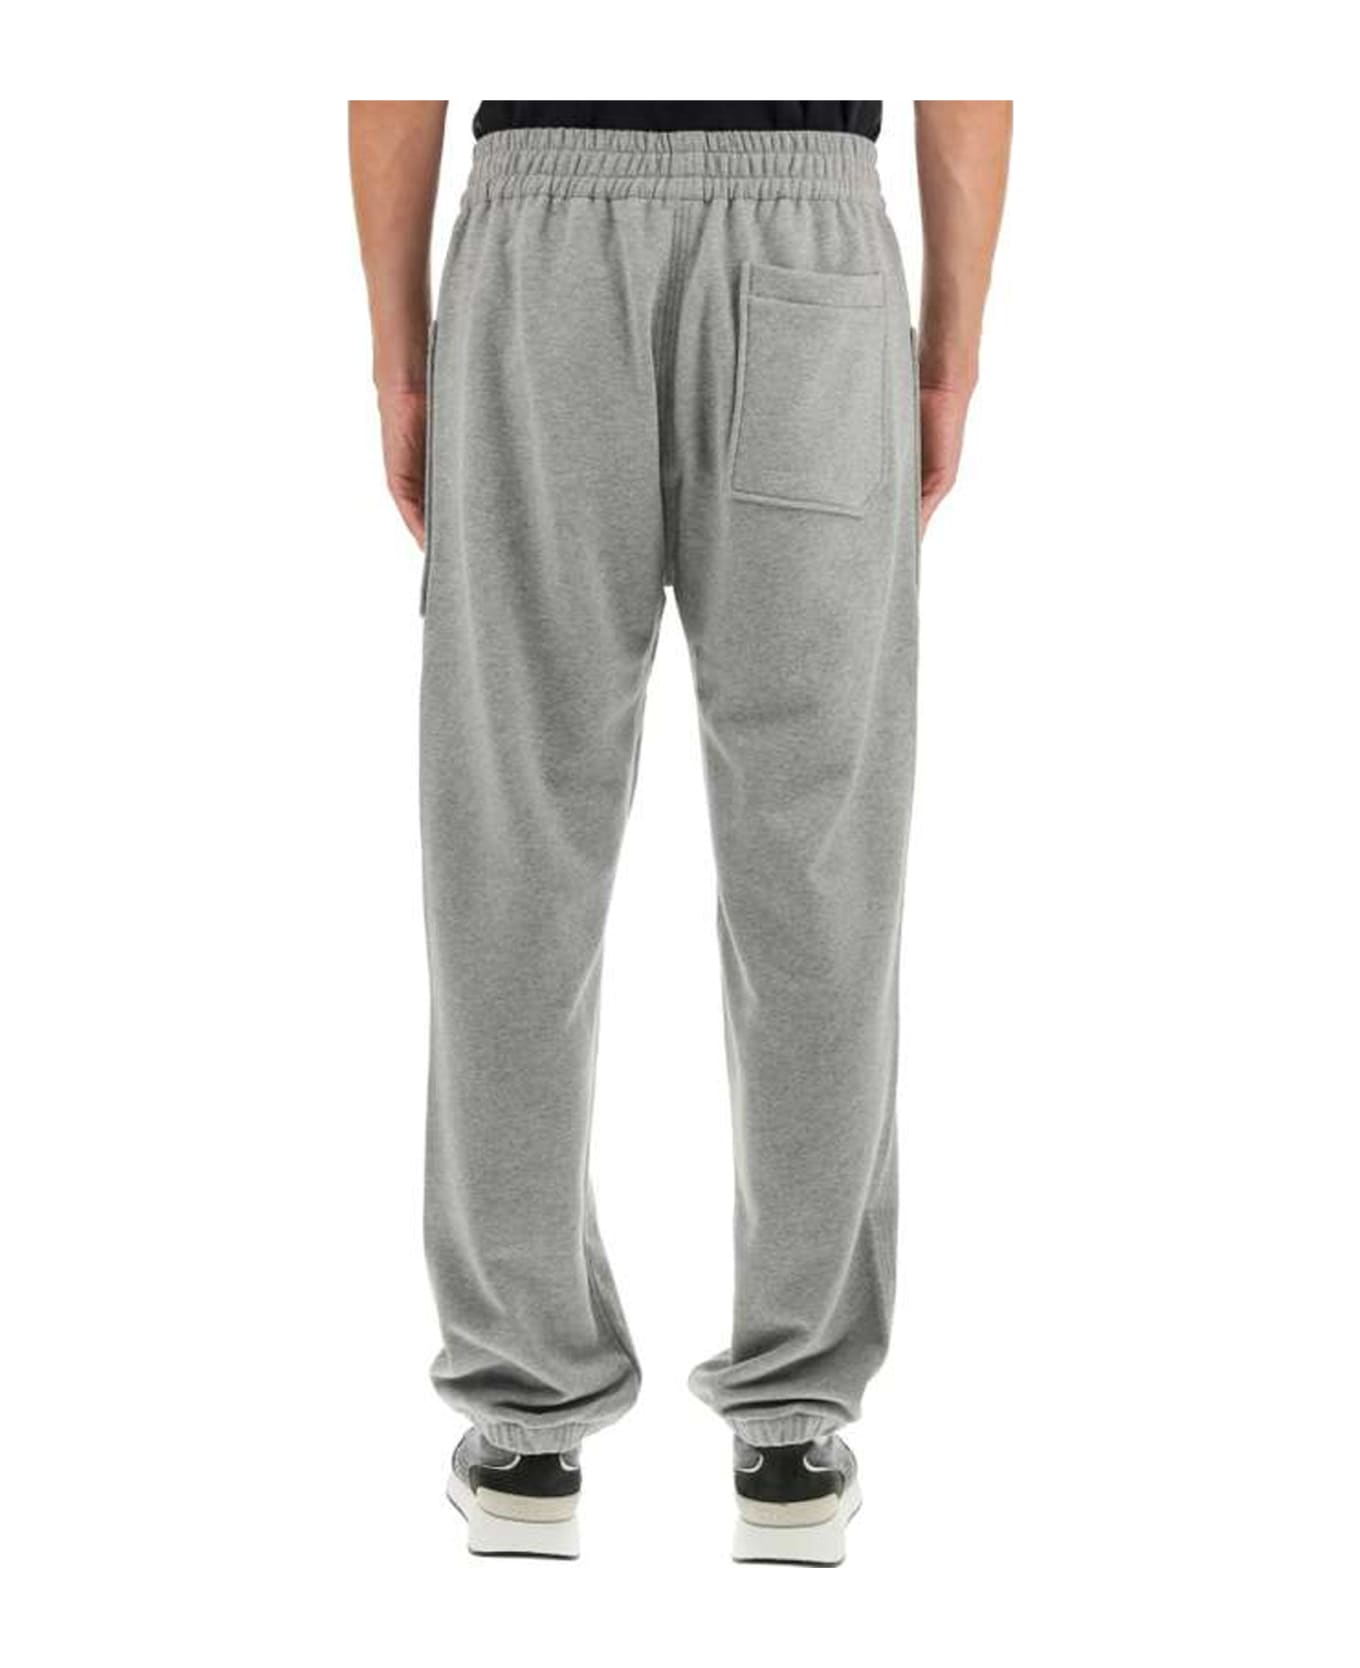 Zegna Cotton Sweatpants - Gray スウェットパンツ